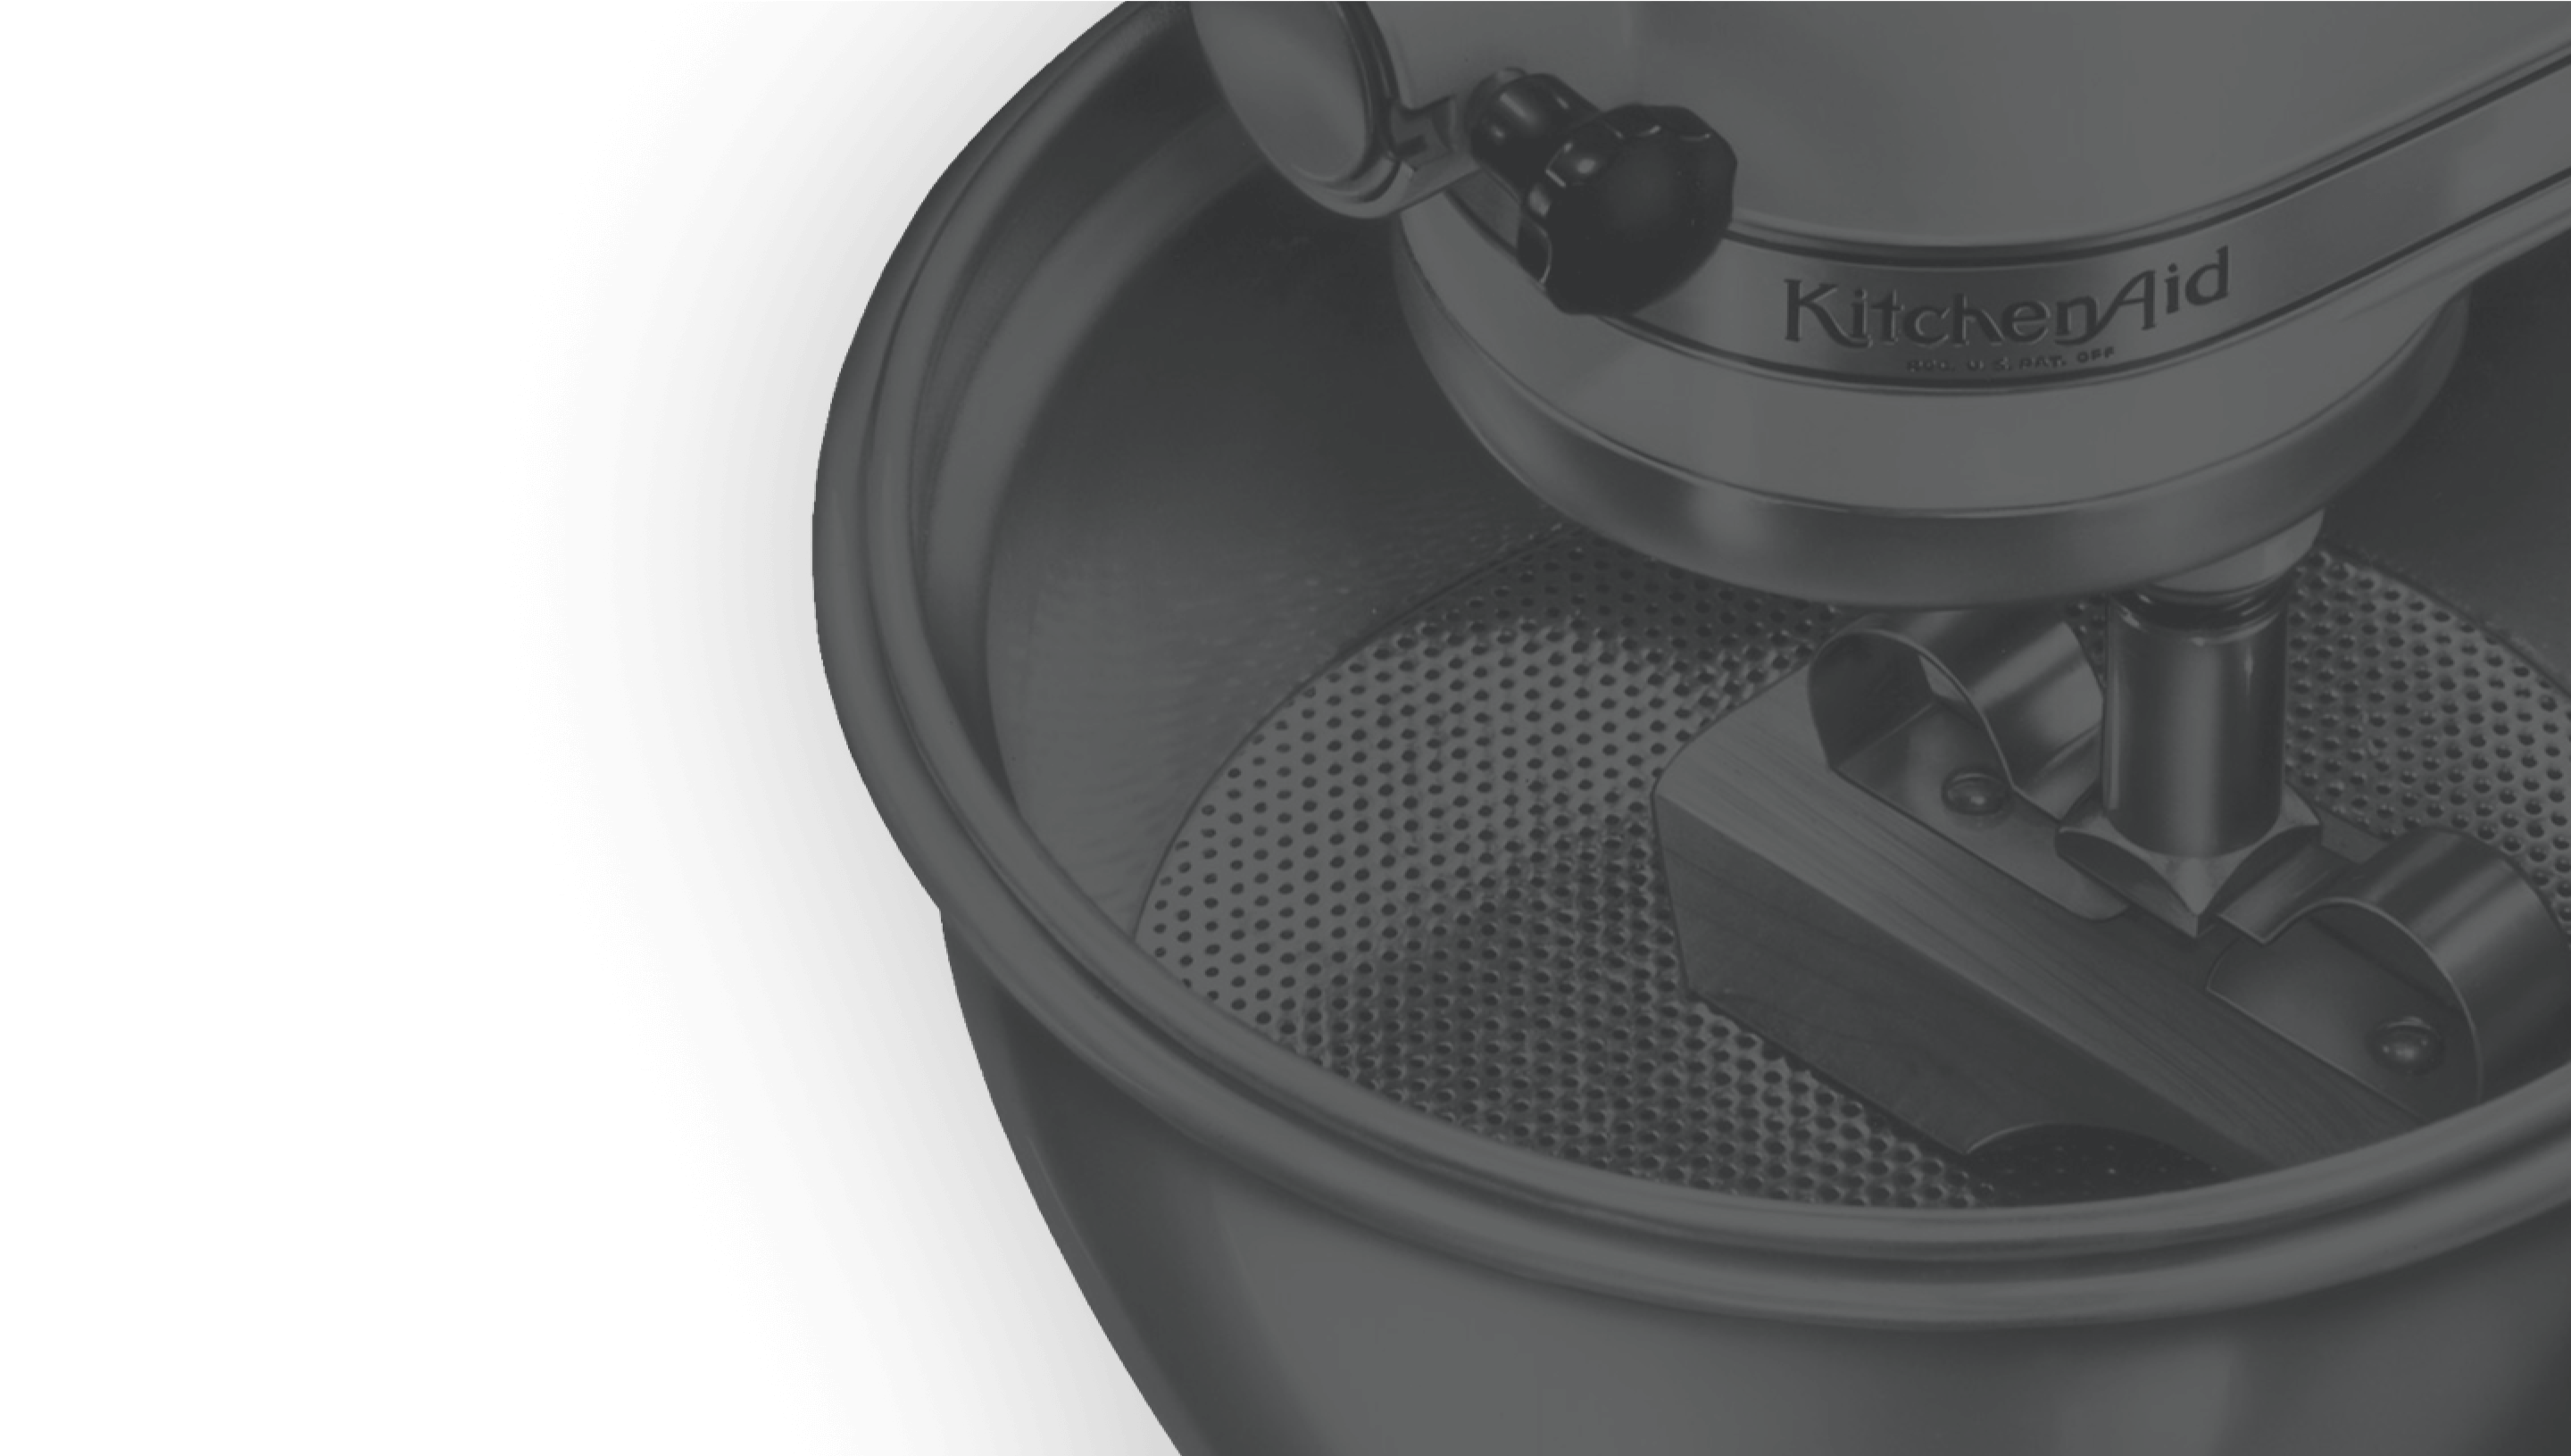 A visual history of KitchenAid stand mixers - CNET